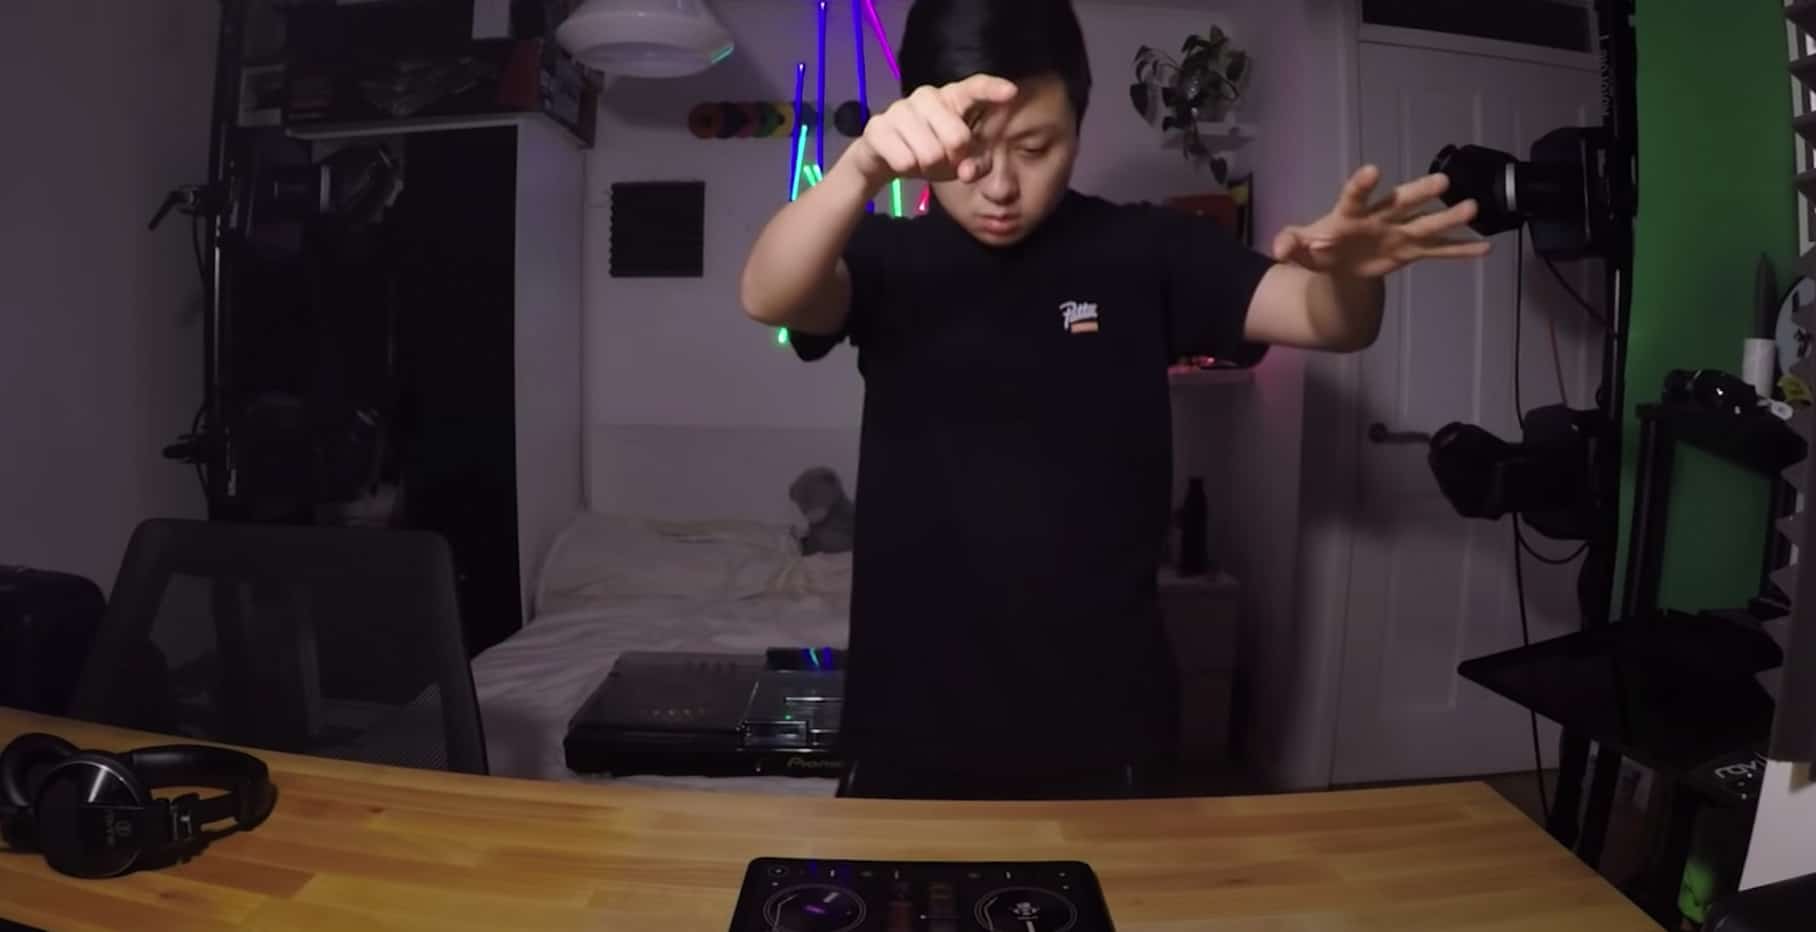 djay agregó Gesture Control: ¡usa tus manos para controlar la mezcla! 4